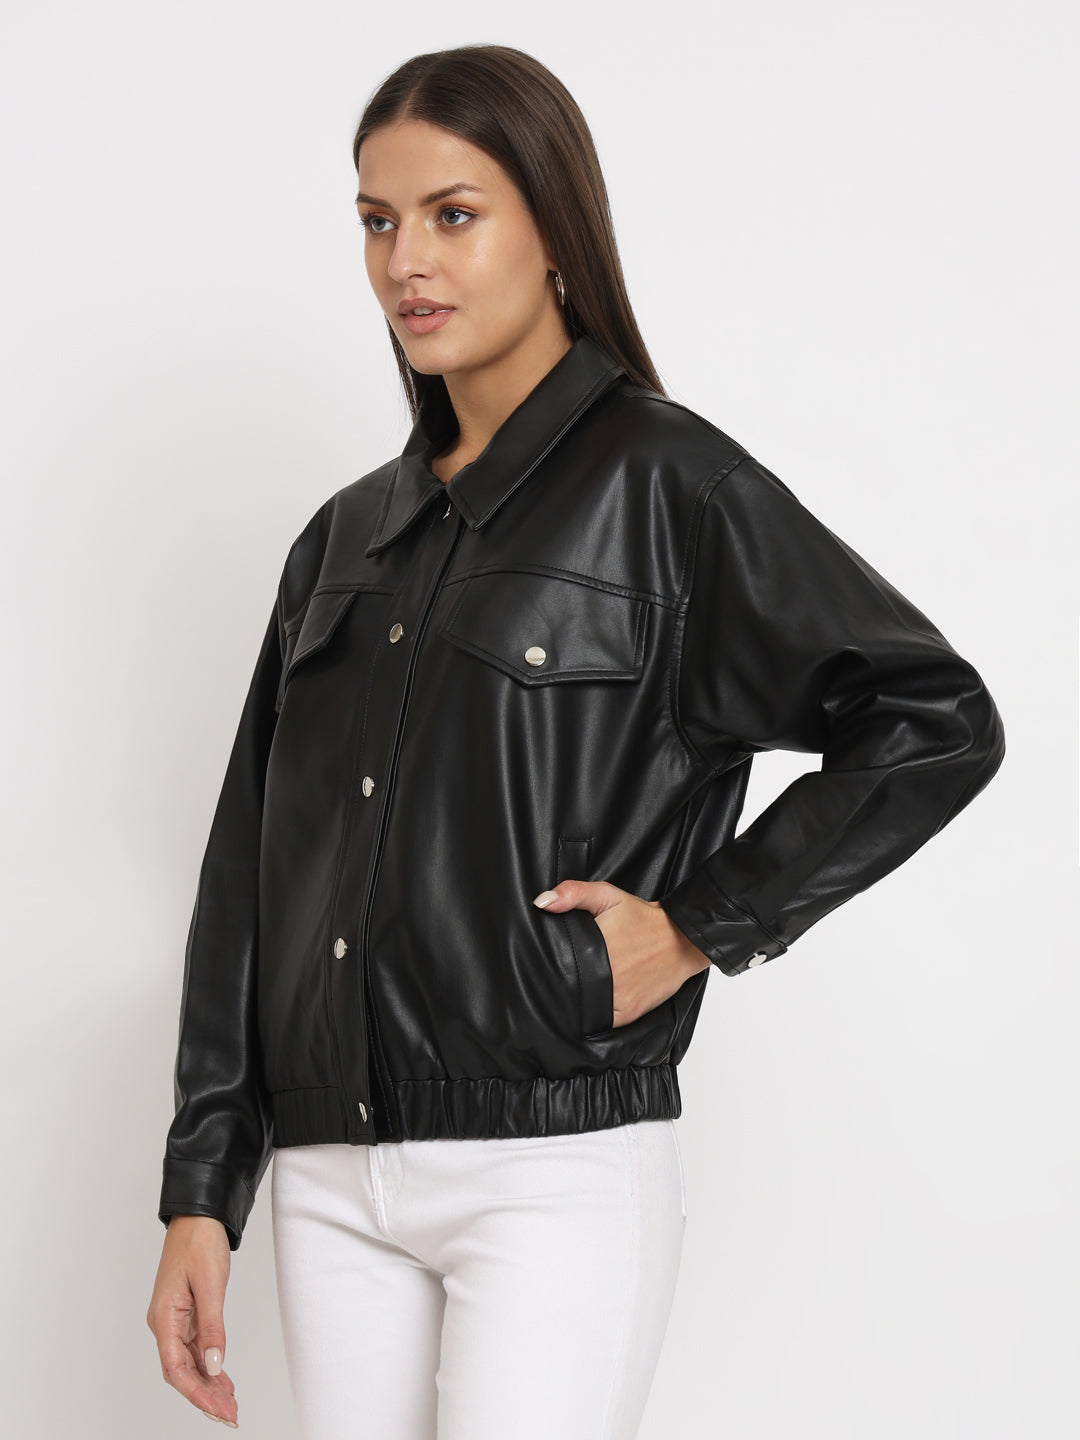 Fahsyee Women's Faux Leather Jackets, Plus Size Zip Up Motorcycle Short PU Moto  Biker Outwear Fitted Slim Coat Black Size 0X at Amazon Women's Coats Shop